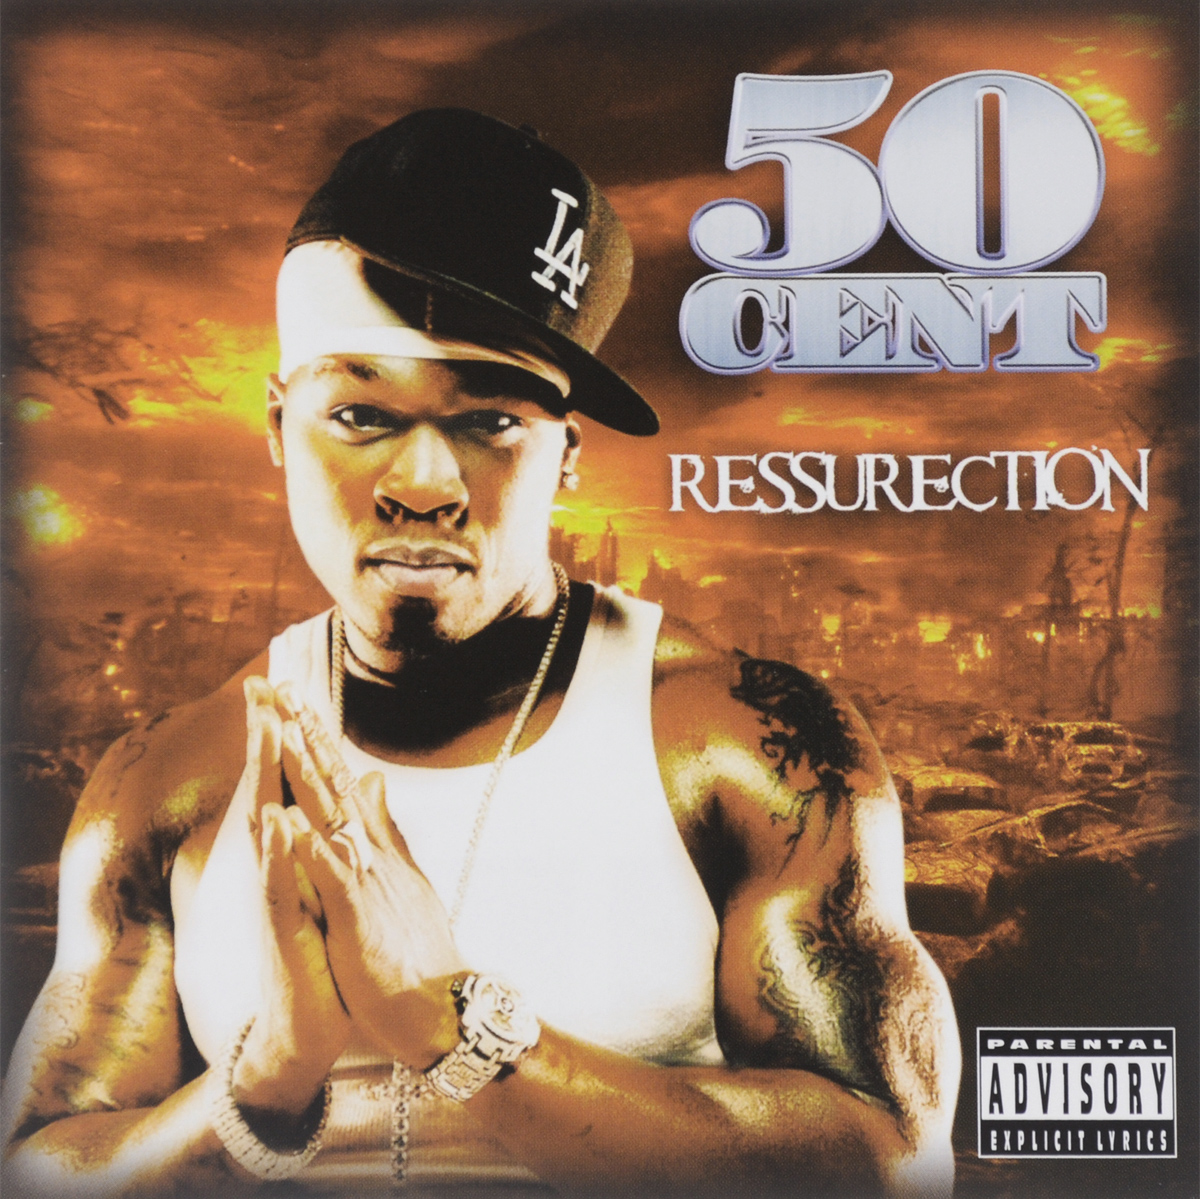 50 Cent 50 Cent. Ressurection